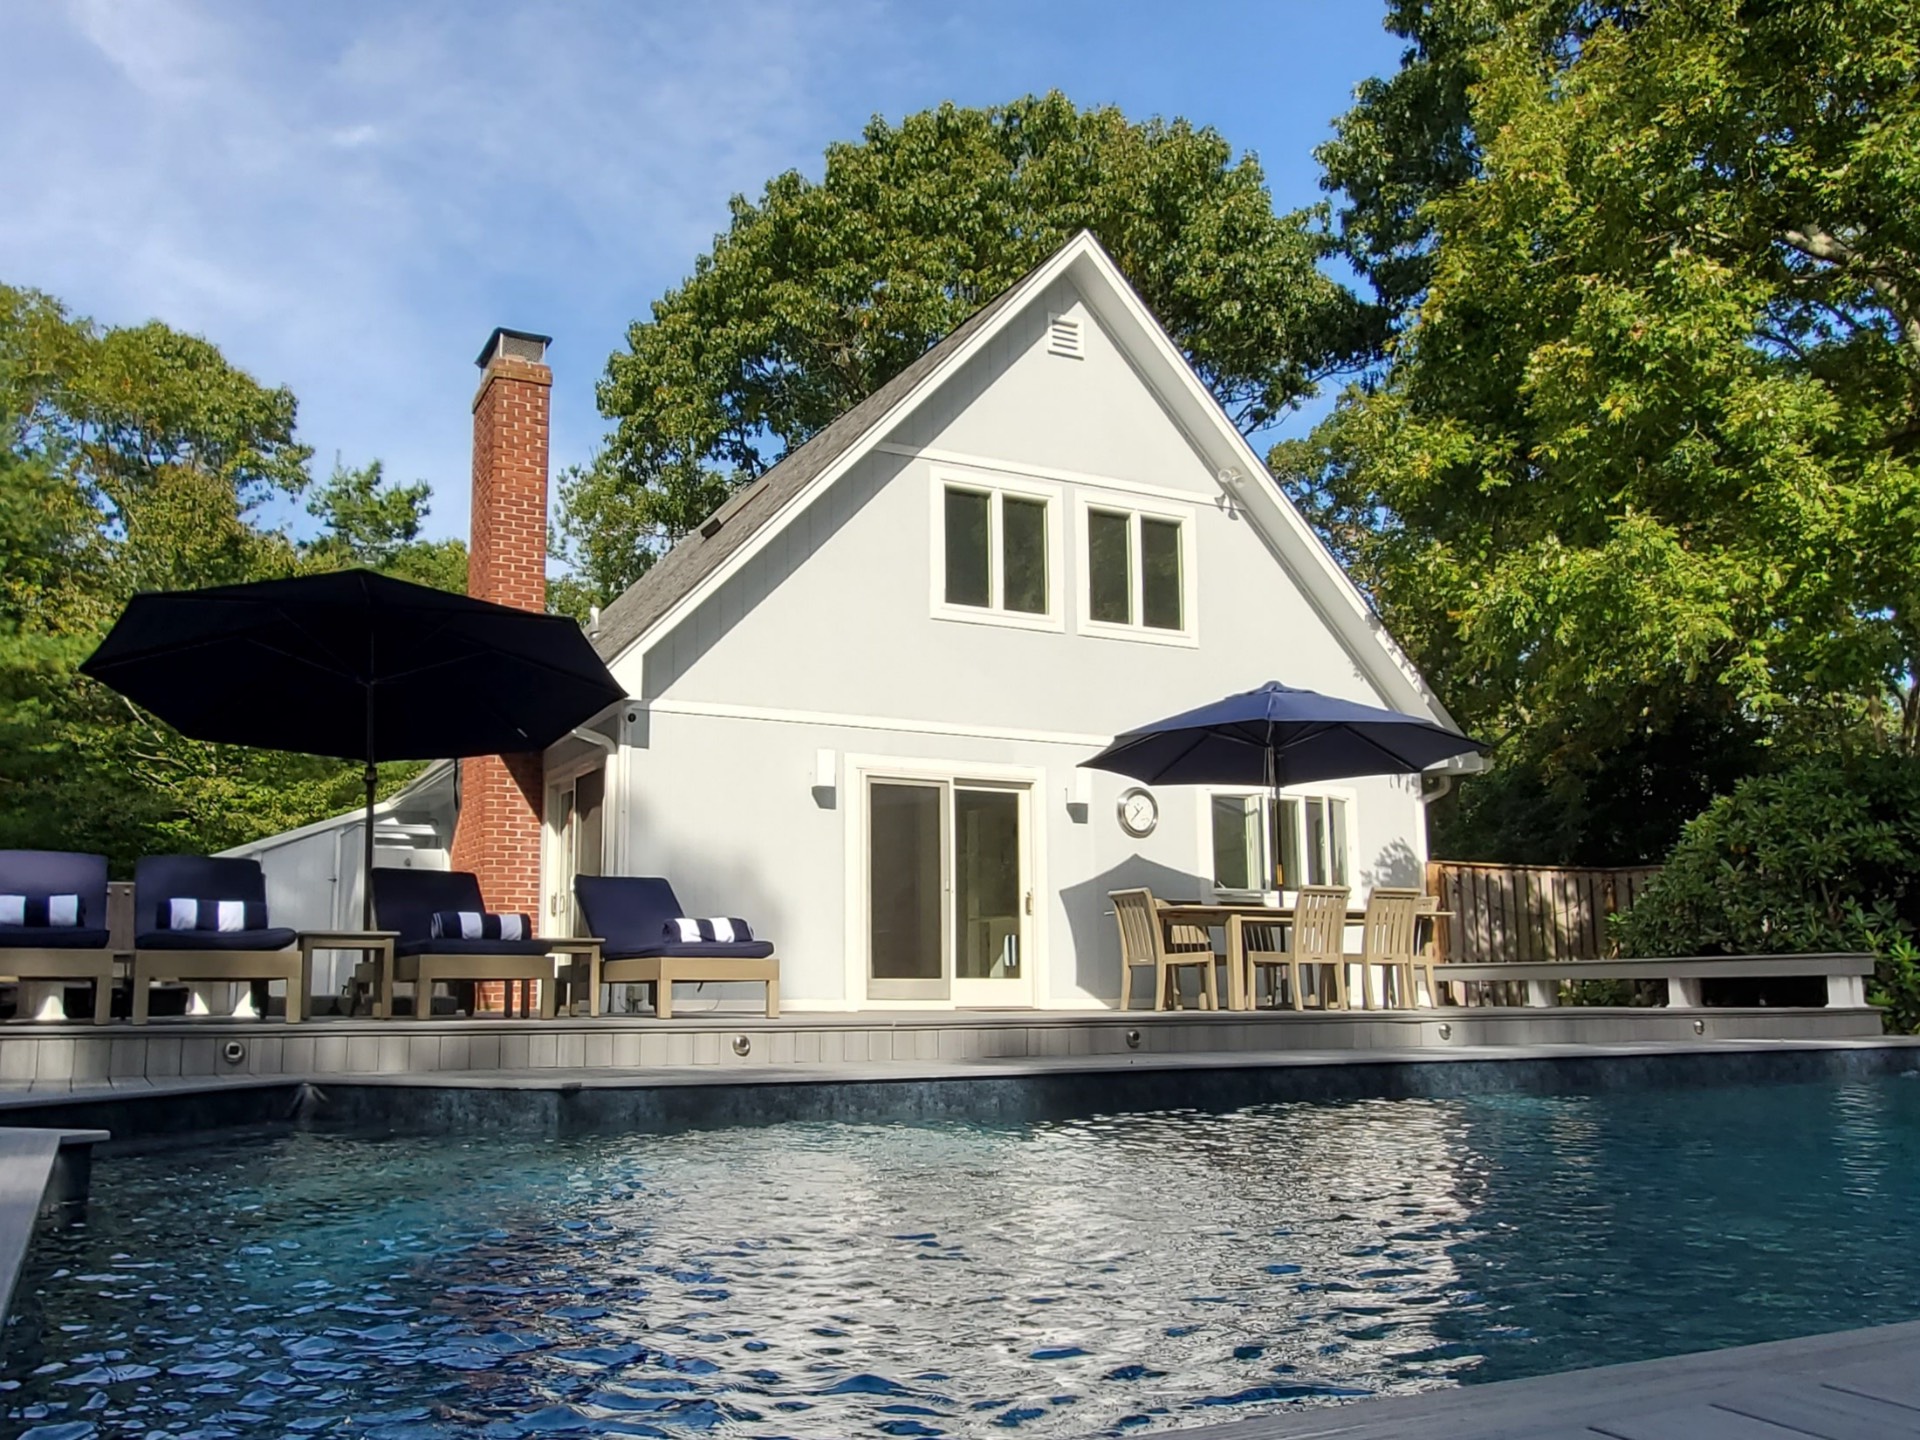 Rental Property at 128 Harbor Boulevard, Springs, Hamptons, NY - Bedrooms: 3 
Bathrooms: 2  - $15,000 MO.